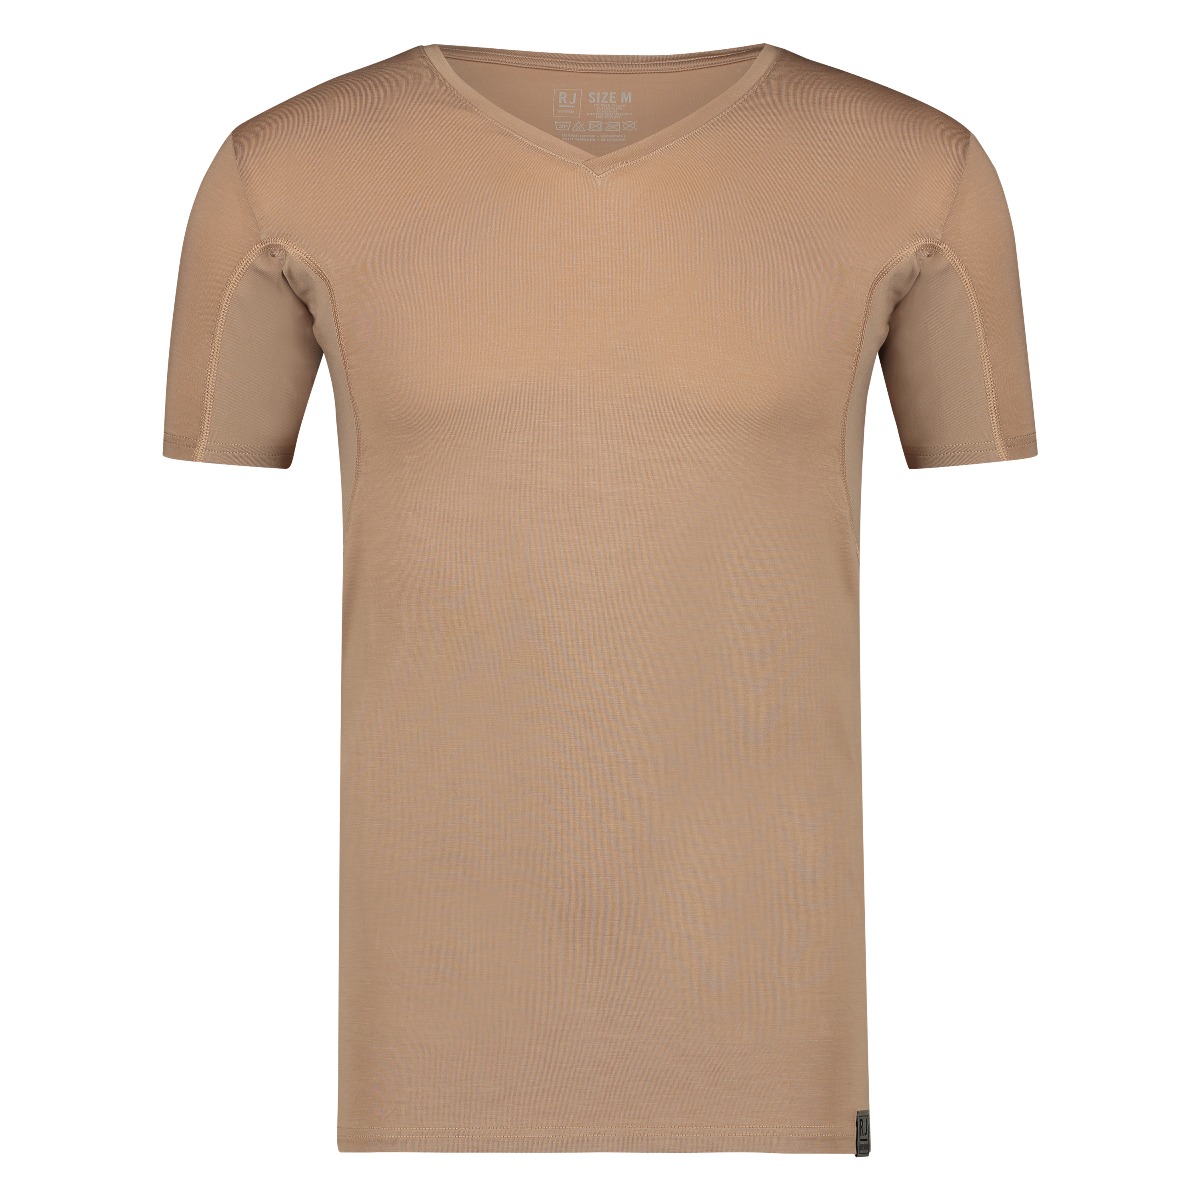 RJ Bodywear Sweatproof Stockholm Heren V-Hals T-Shirt Zand XL